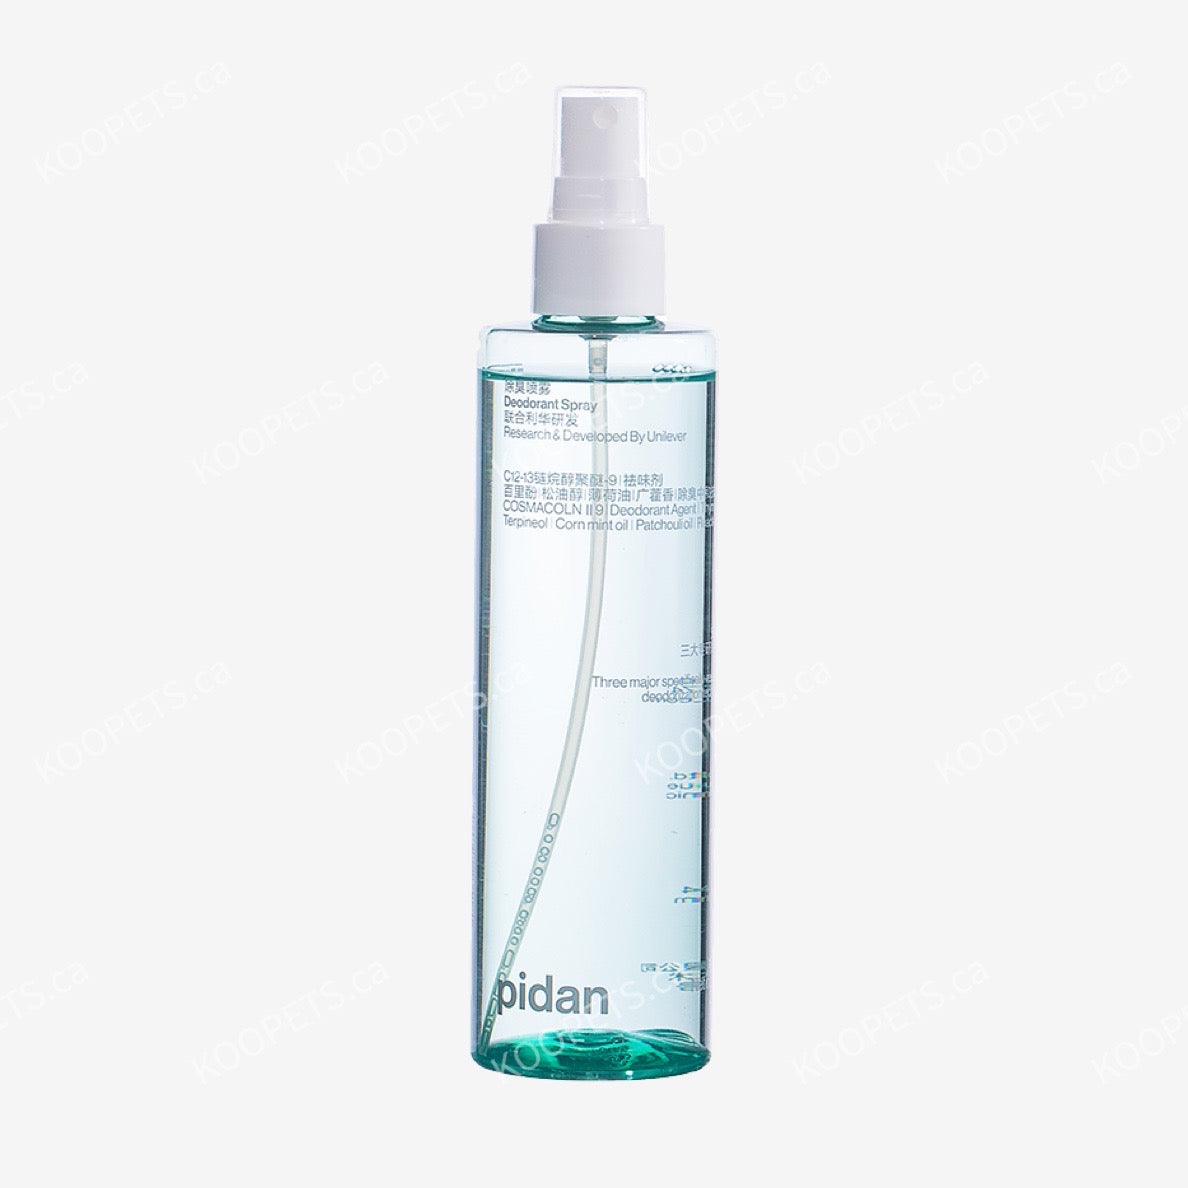 Pidan | Deodorant Spray